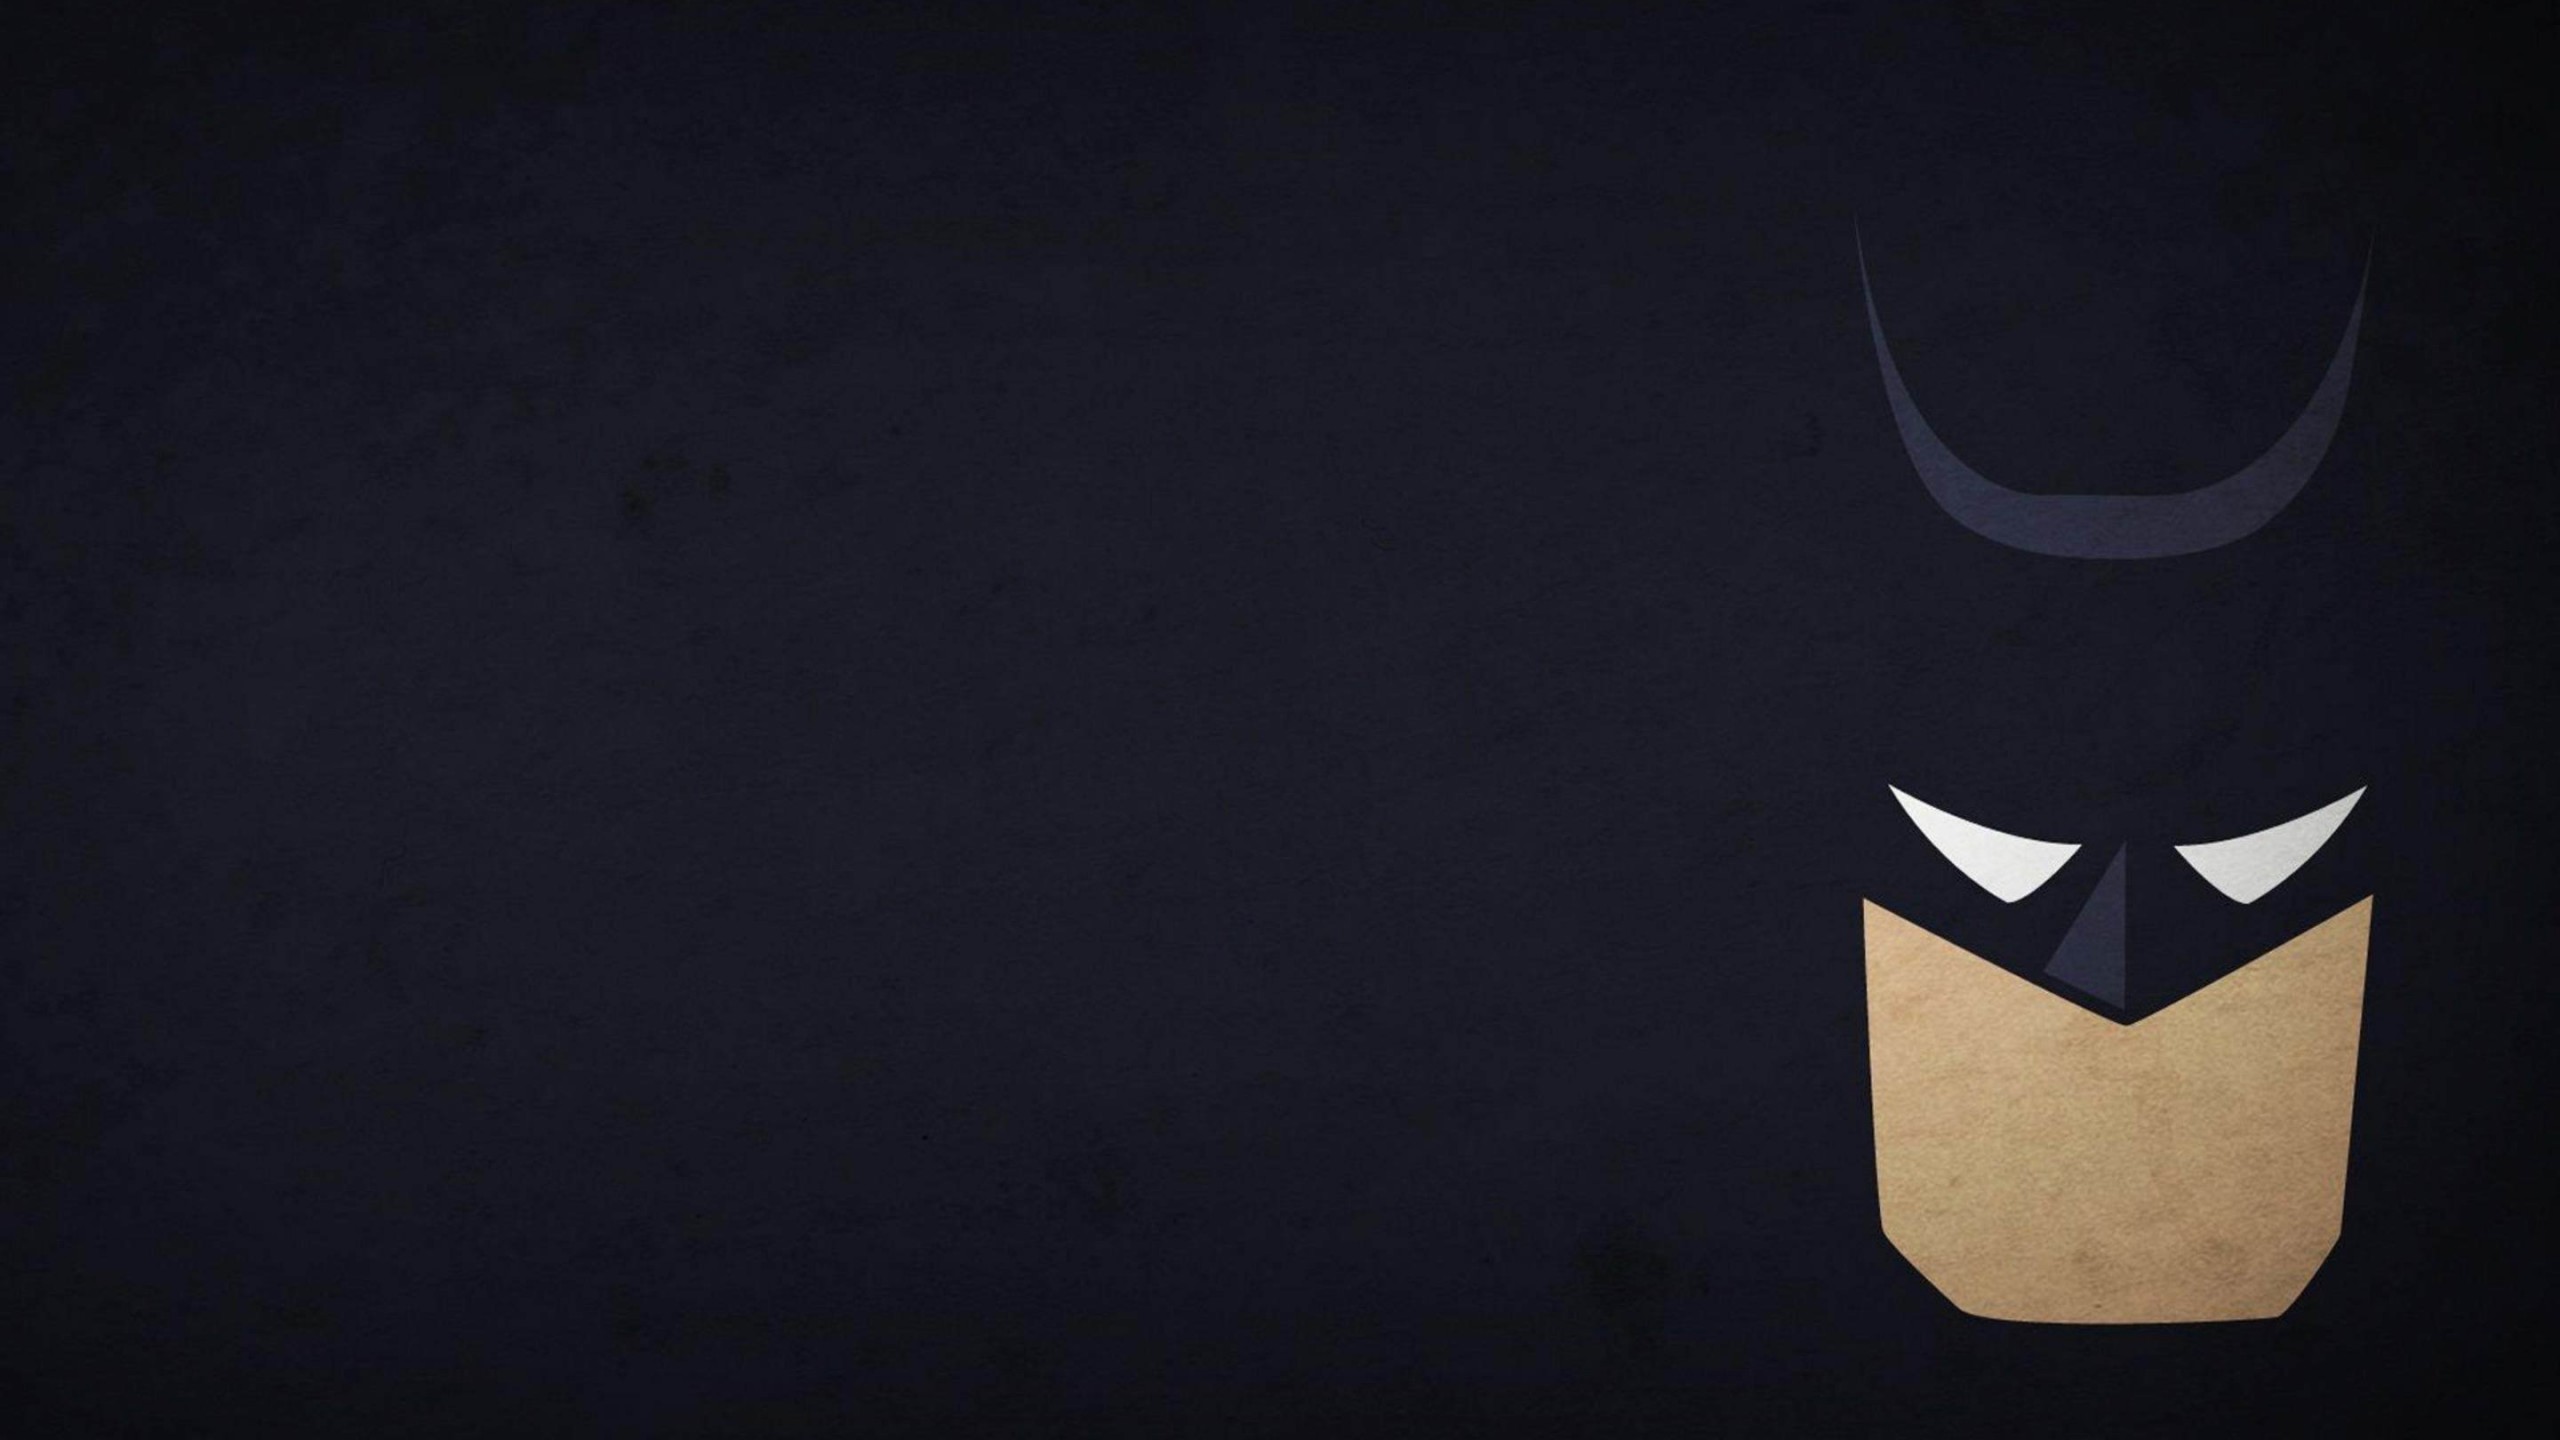 Batman Artwork Wallpaper for Desktop 2560x1440